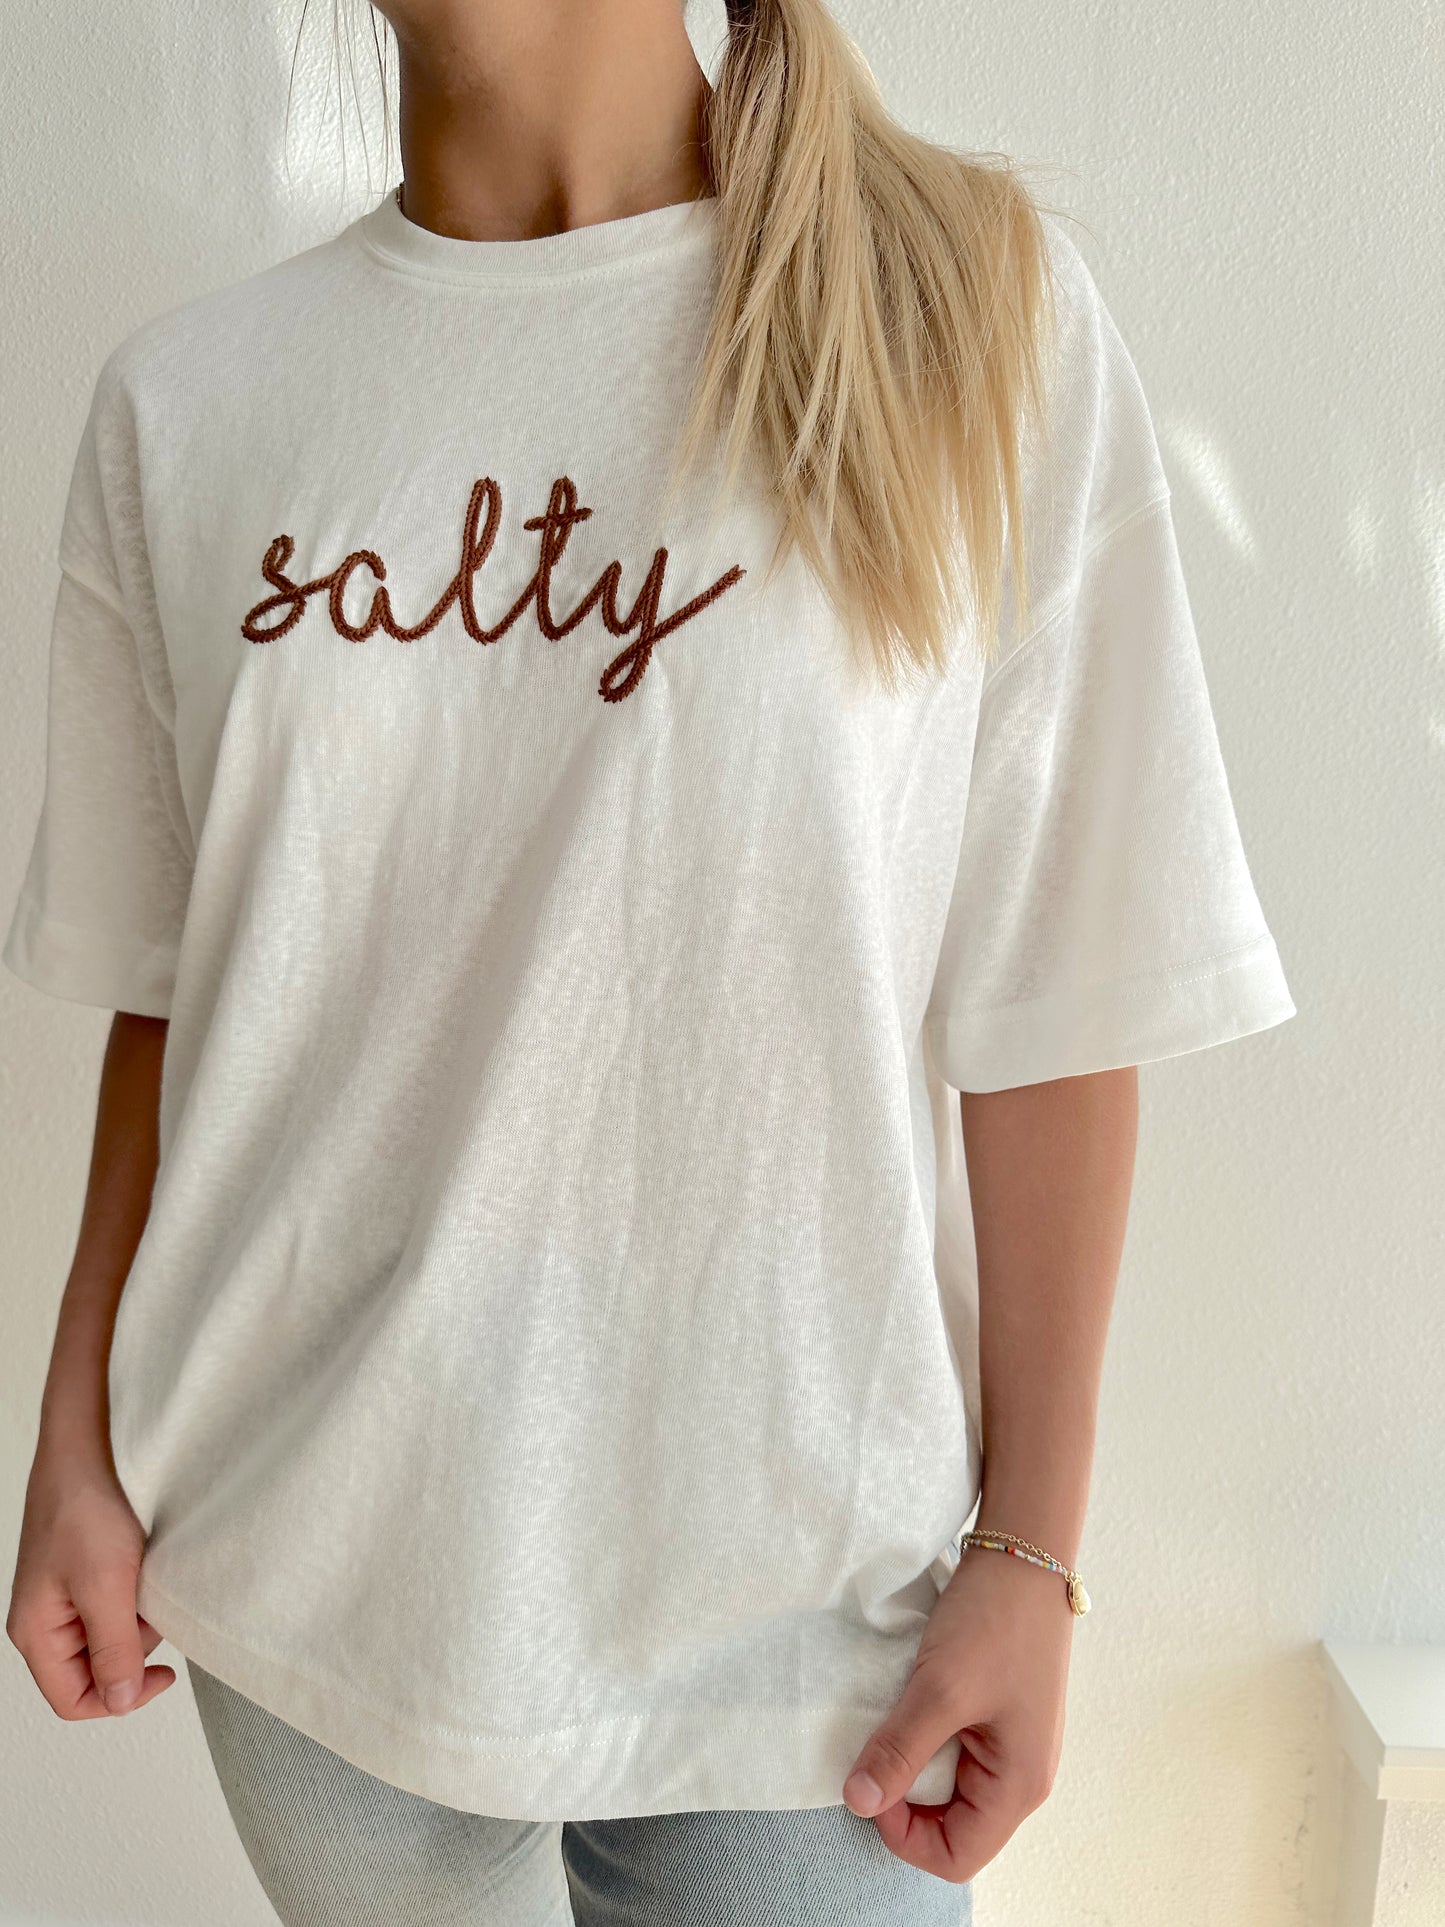 Salty Top